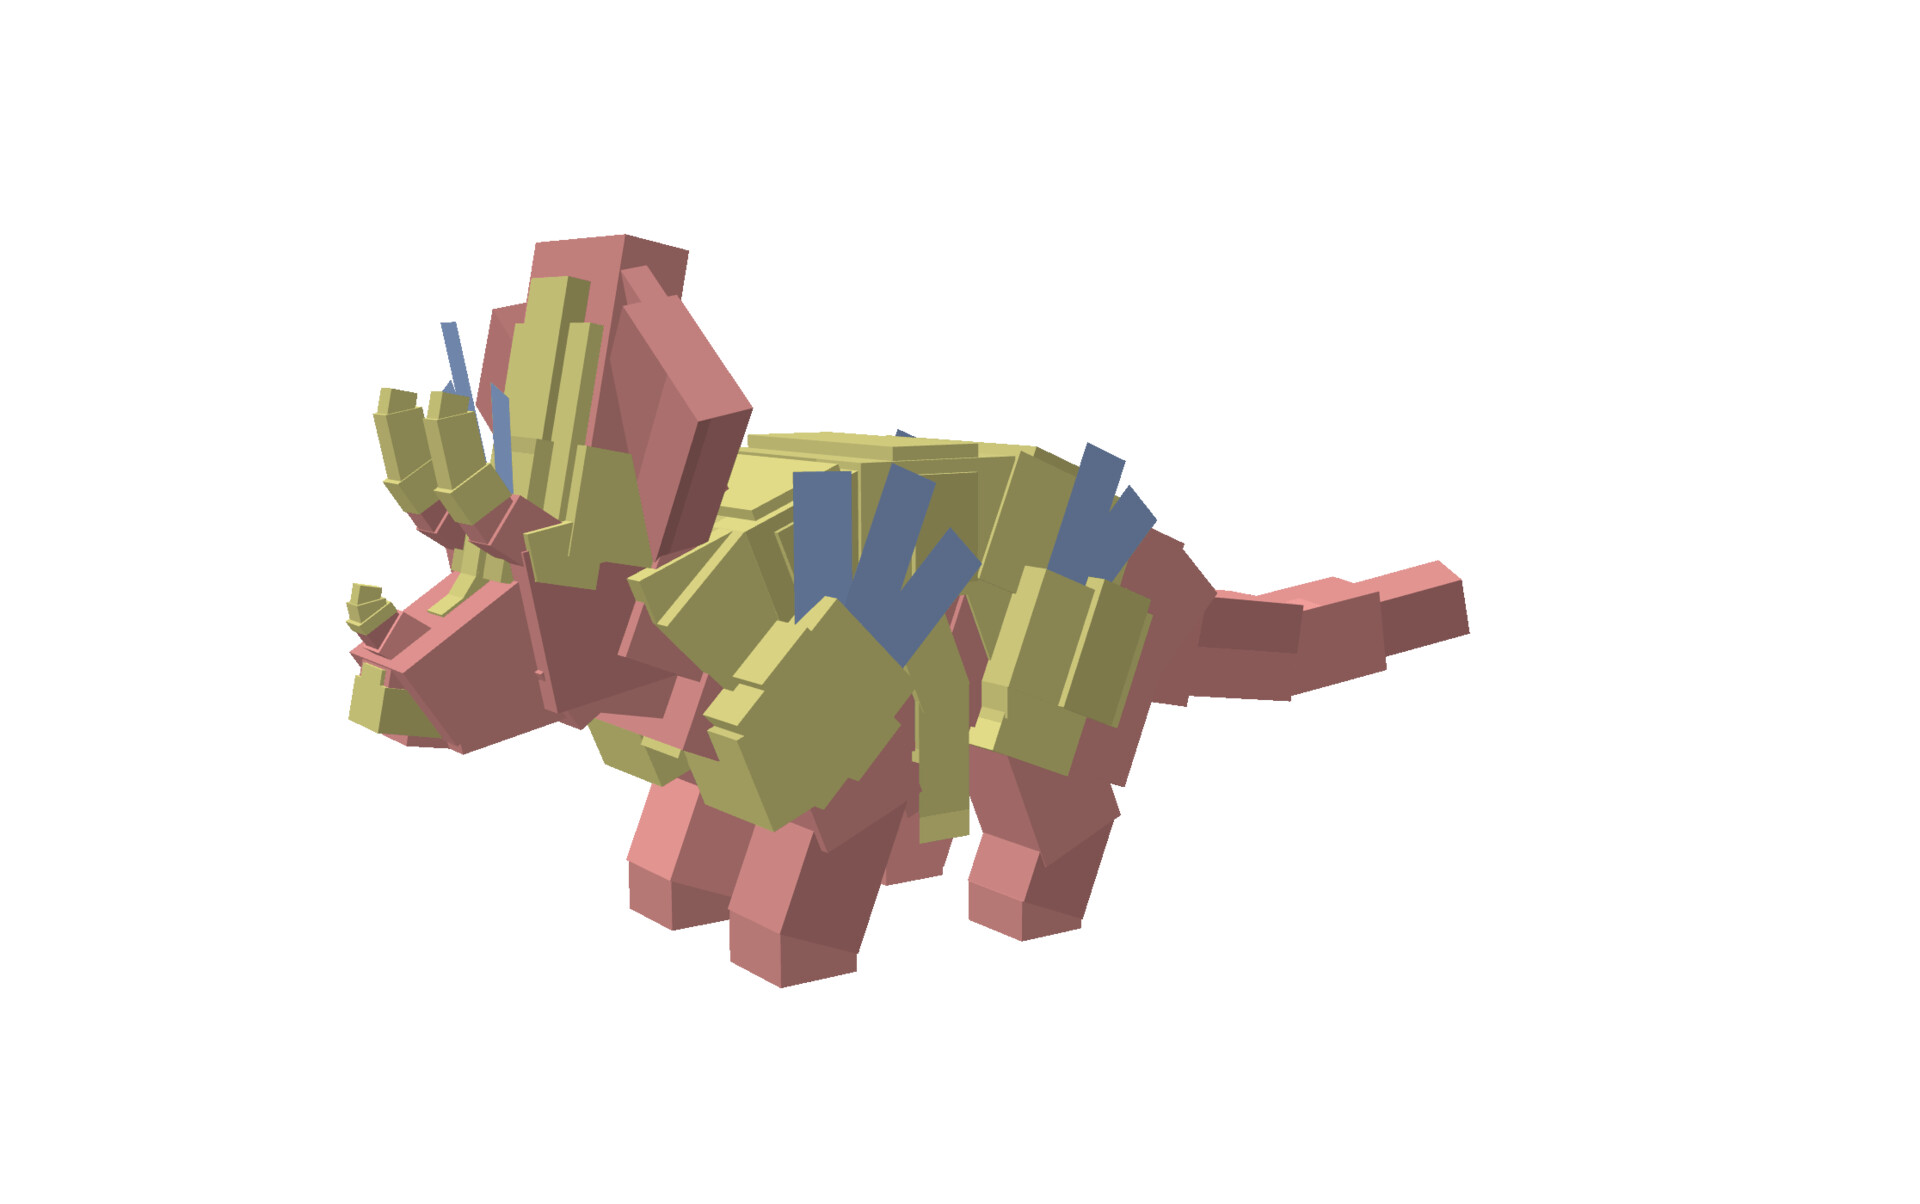 Triceratops NPC addon - Garry's Mod - IndieDB